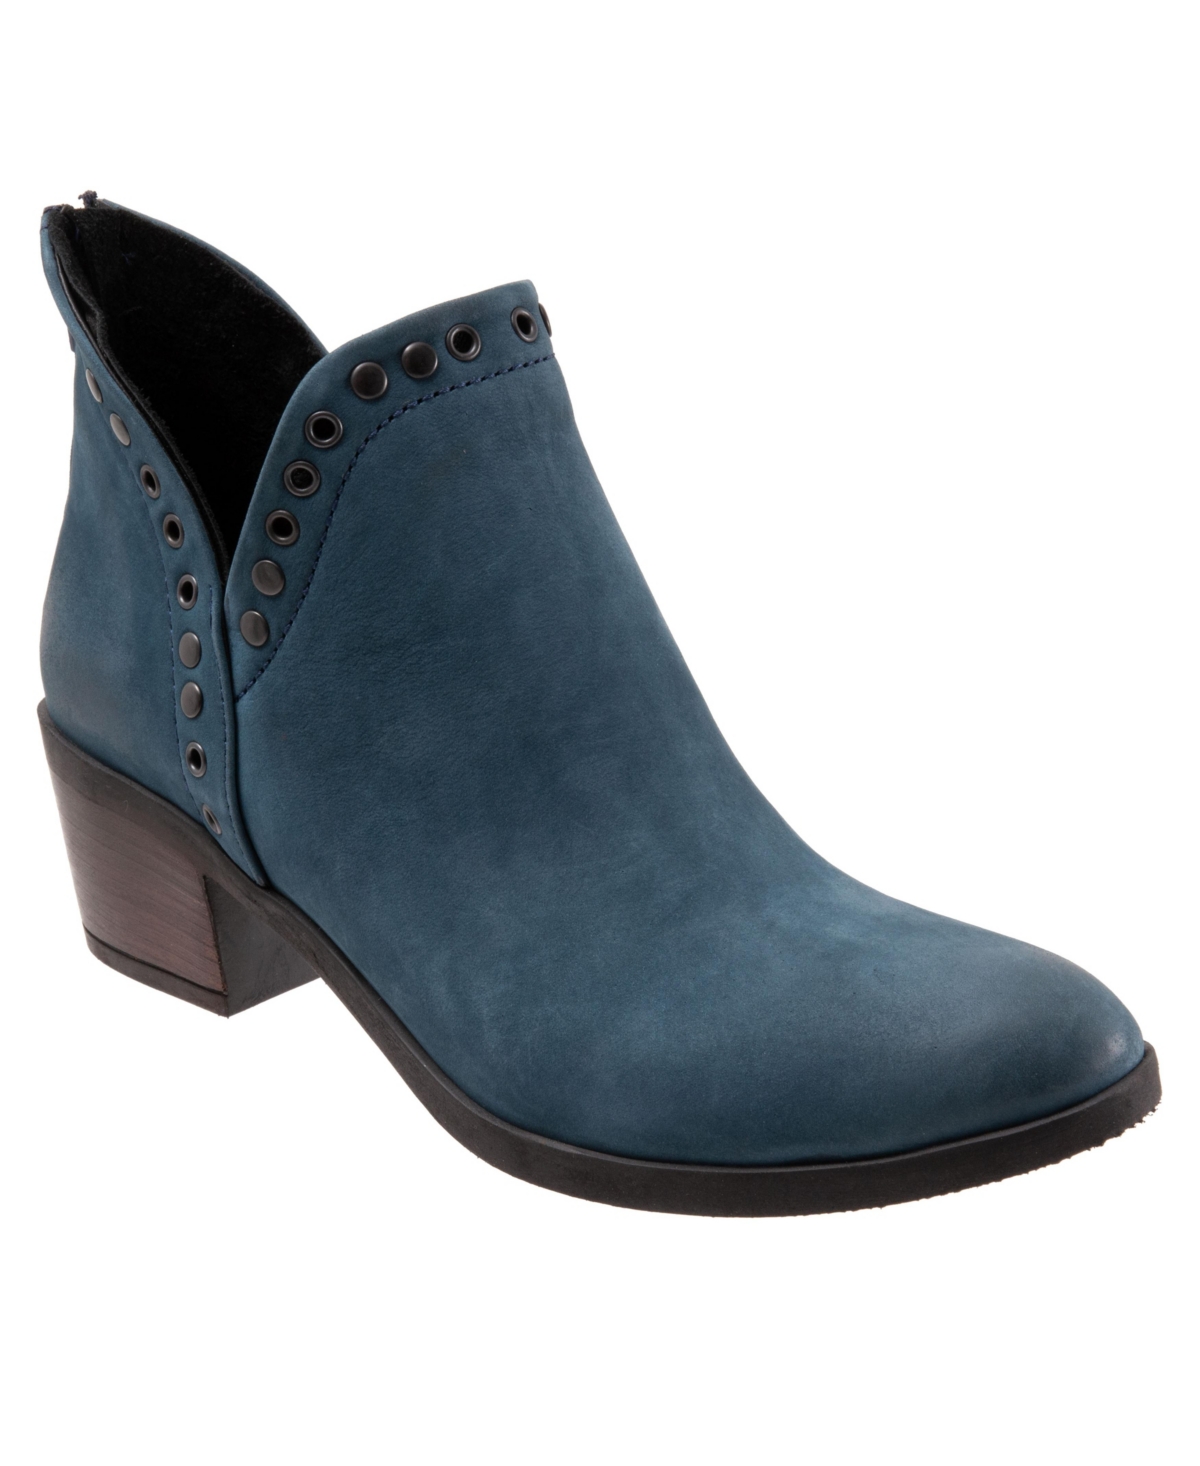 Women's Cora Boots - Blue nubuck